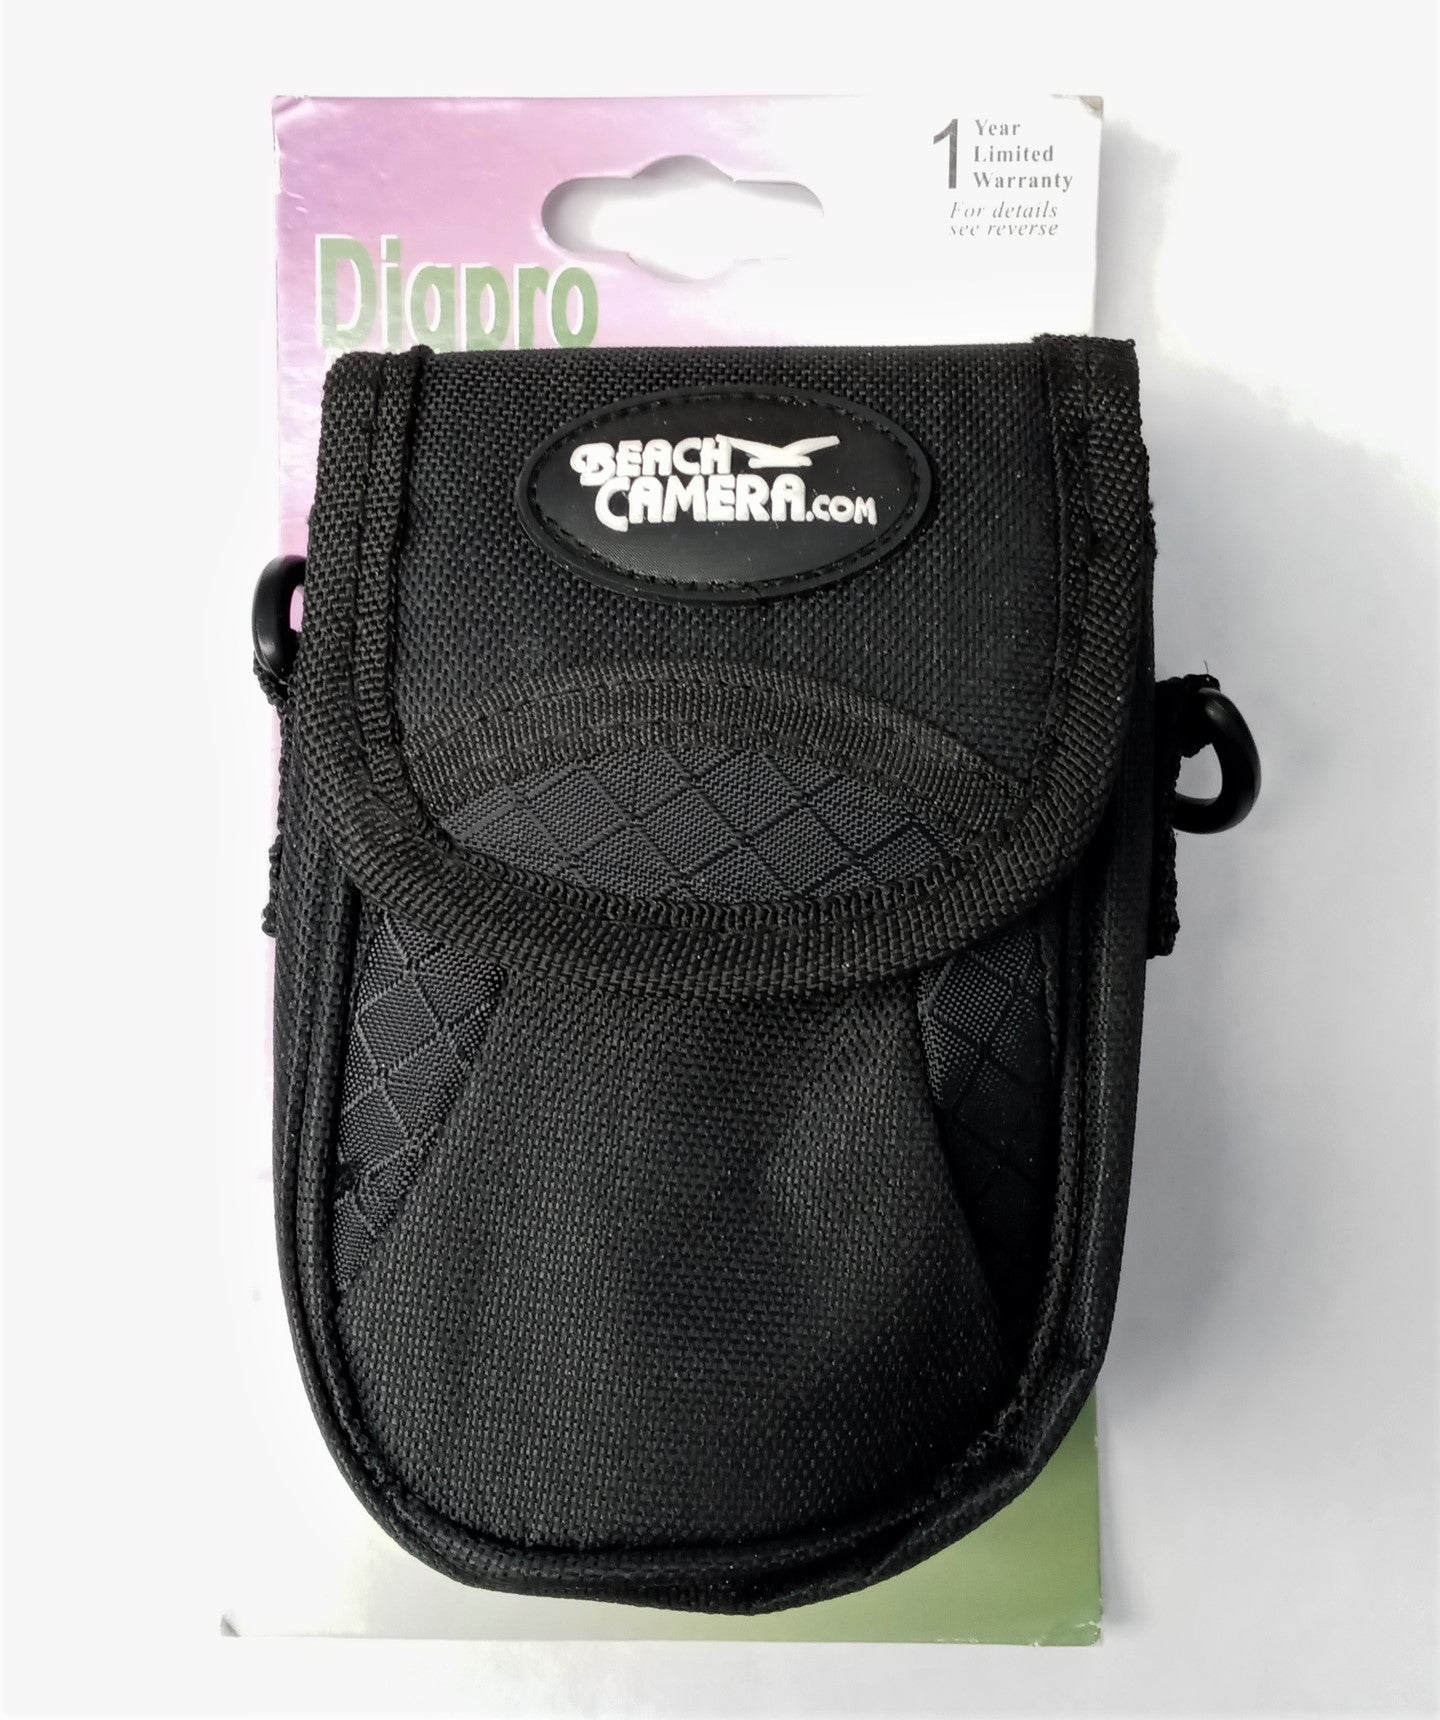 Digpro DP15BEA Digital Camera Case